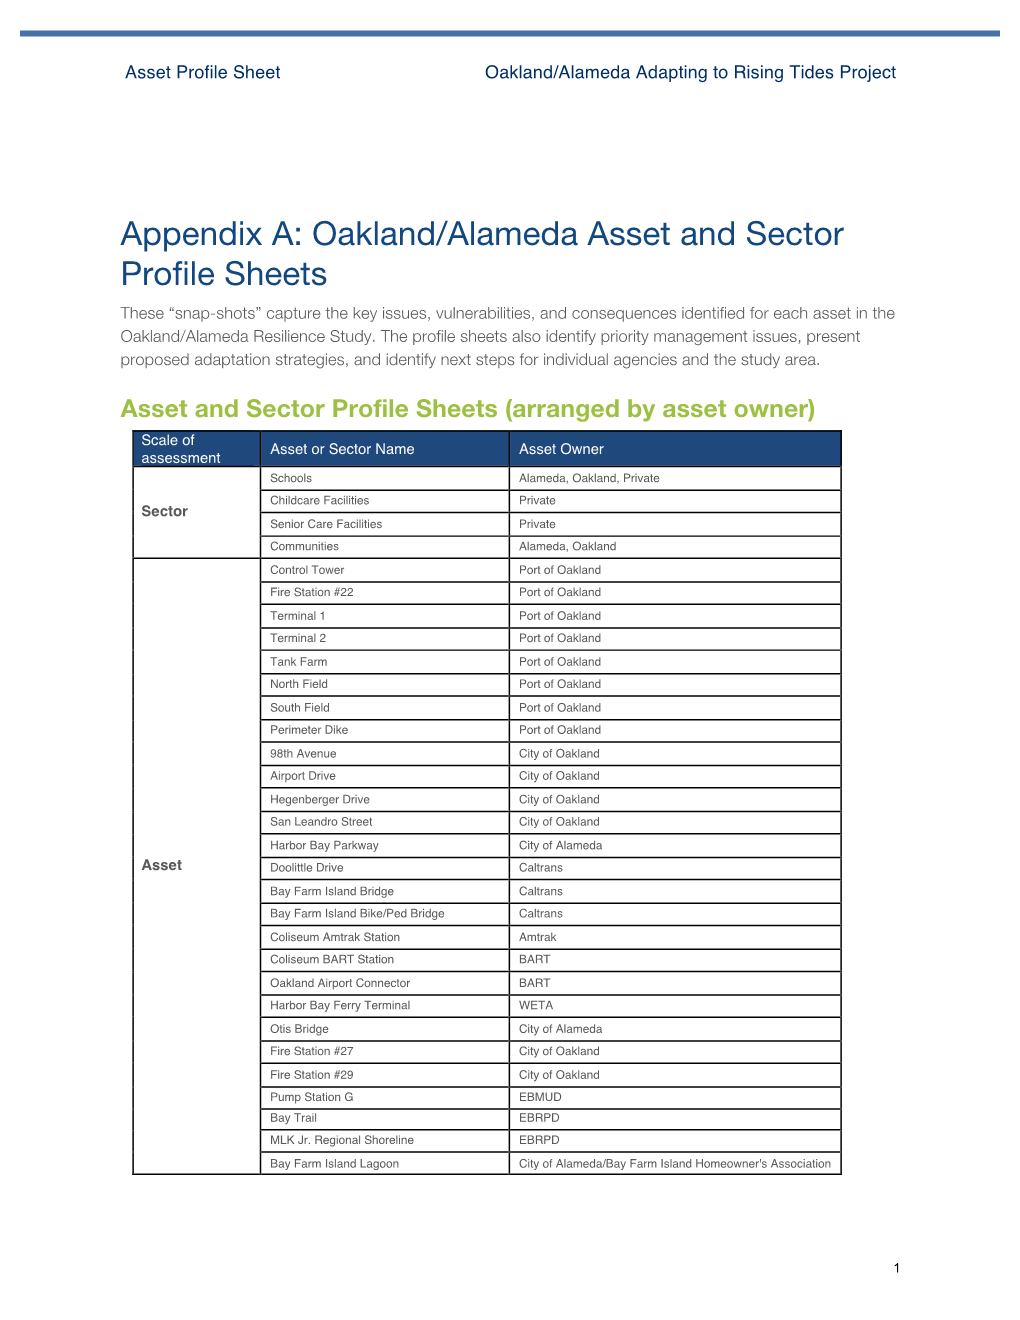 Oakland/Alameda Asset Profile Sheets and Adaptation Responses